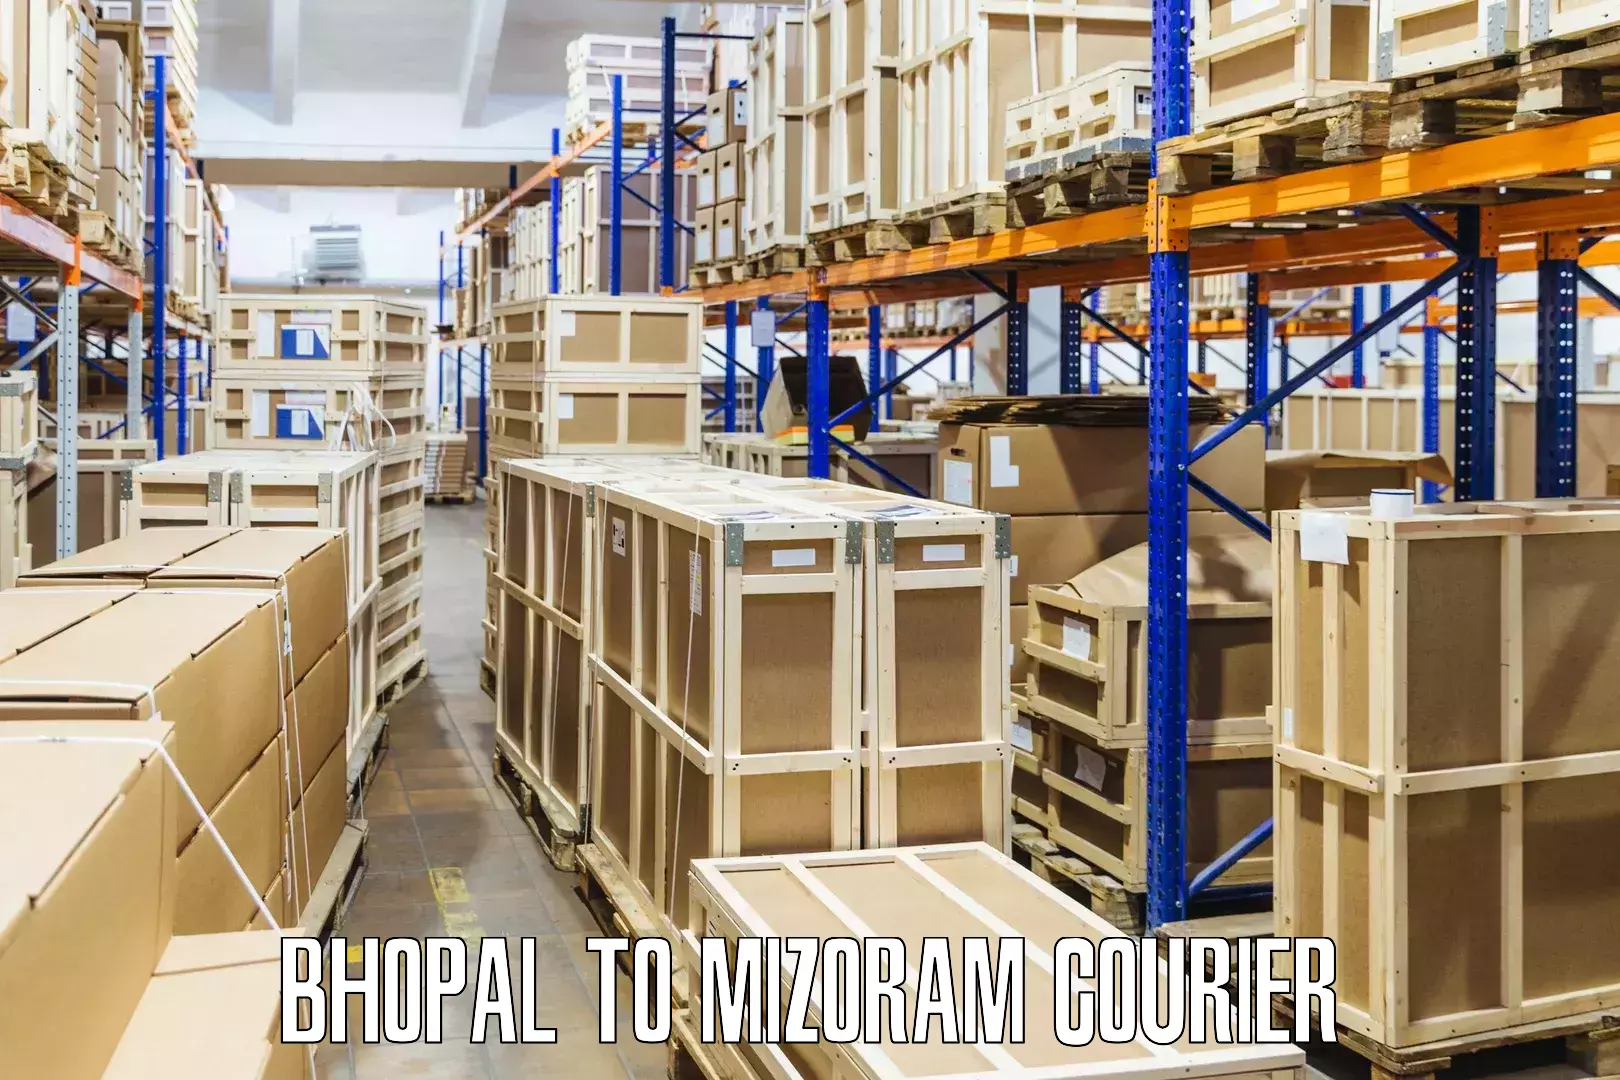 Courier service comparison Bhopal to Chawngte